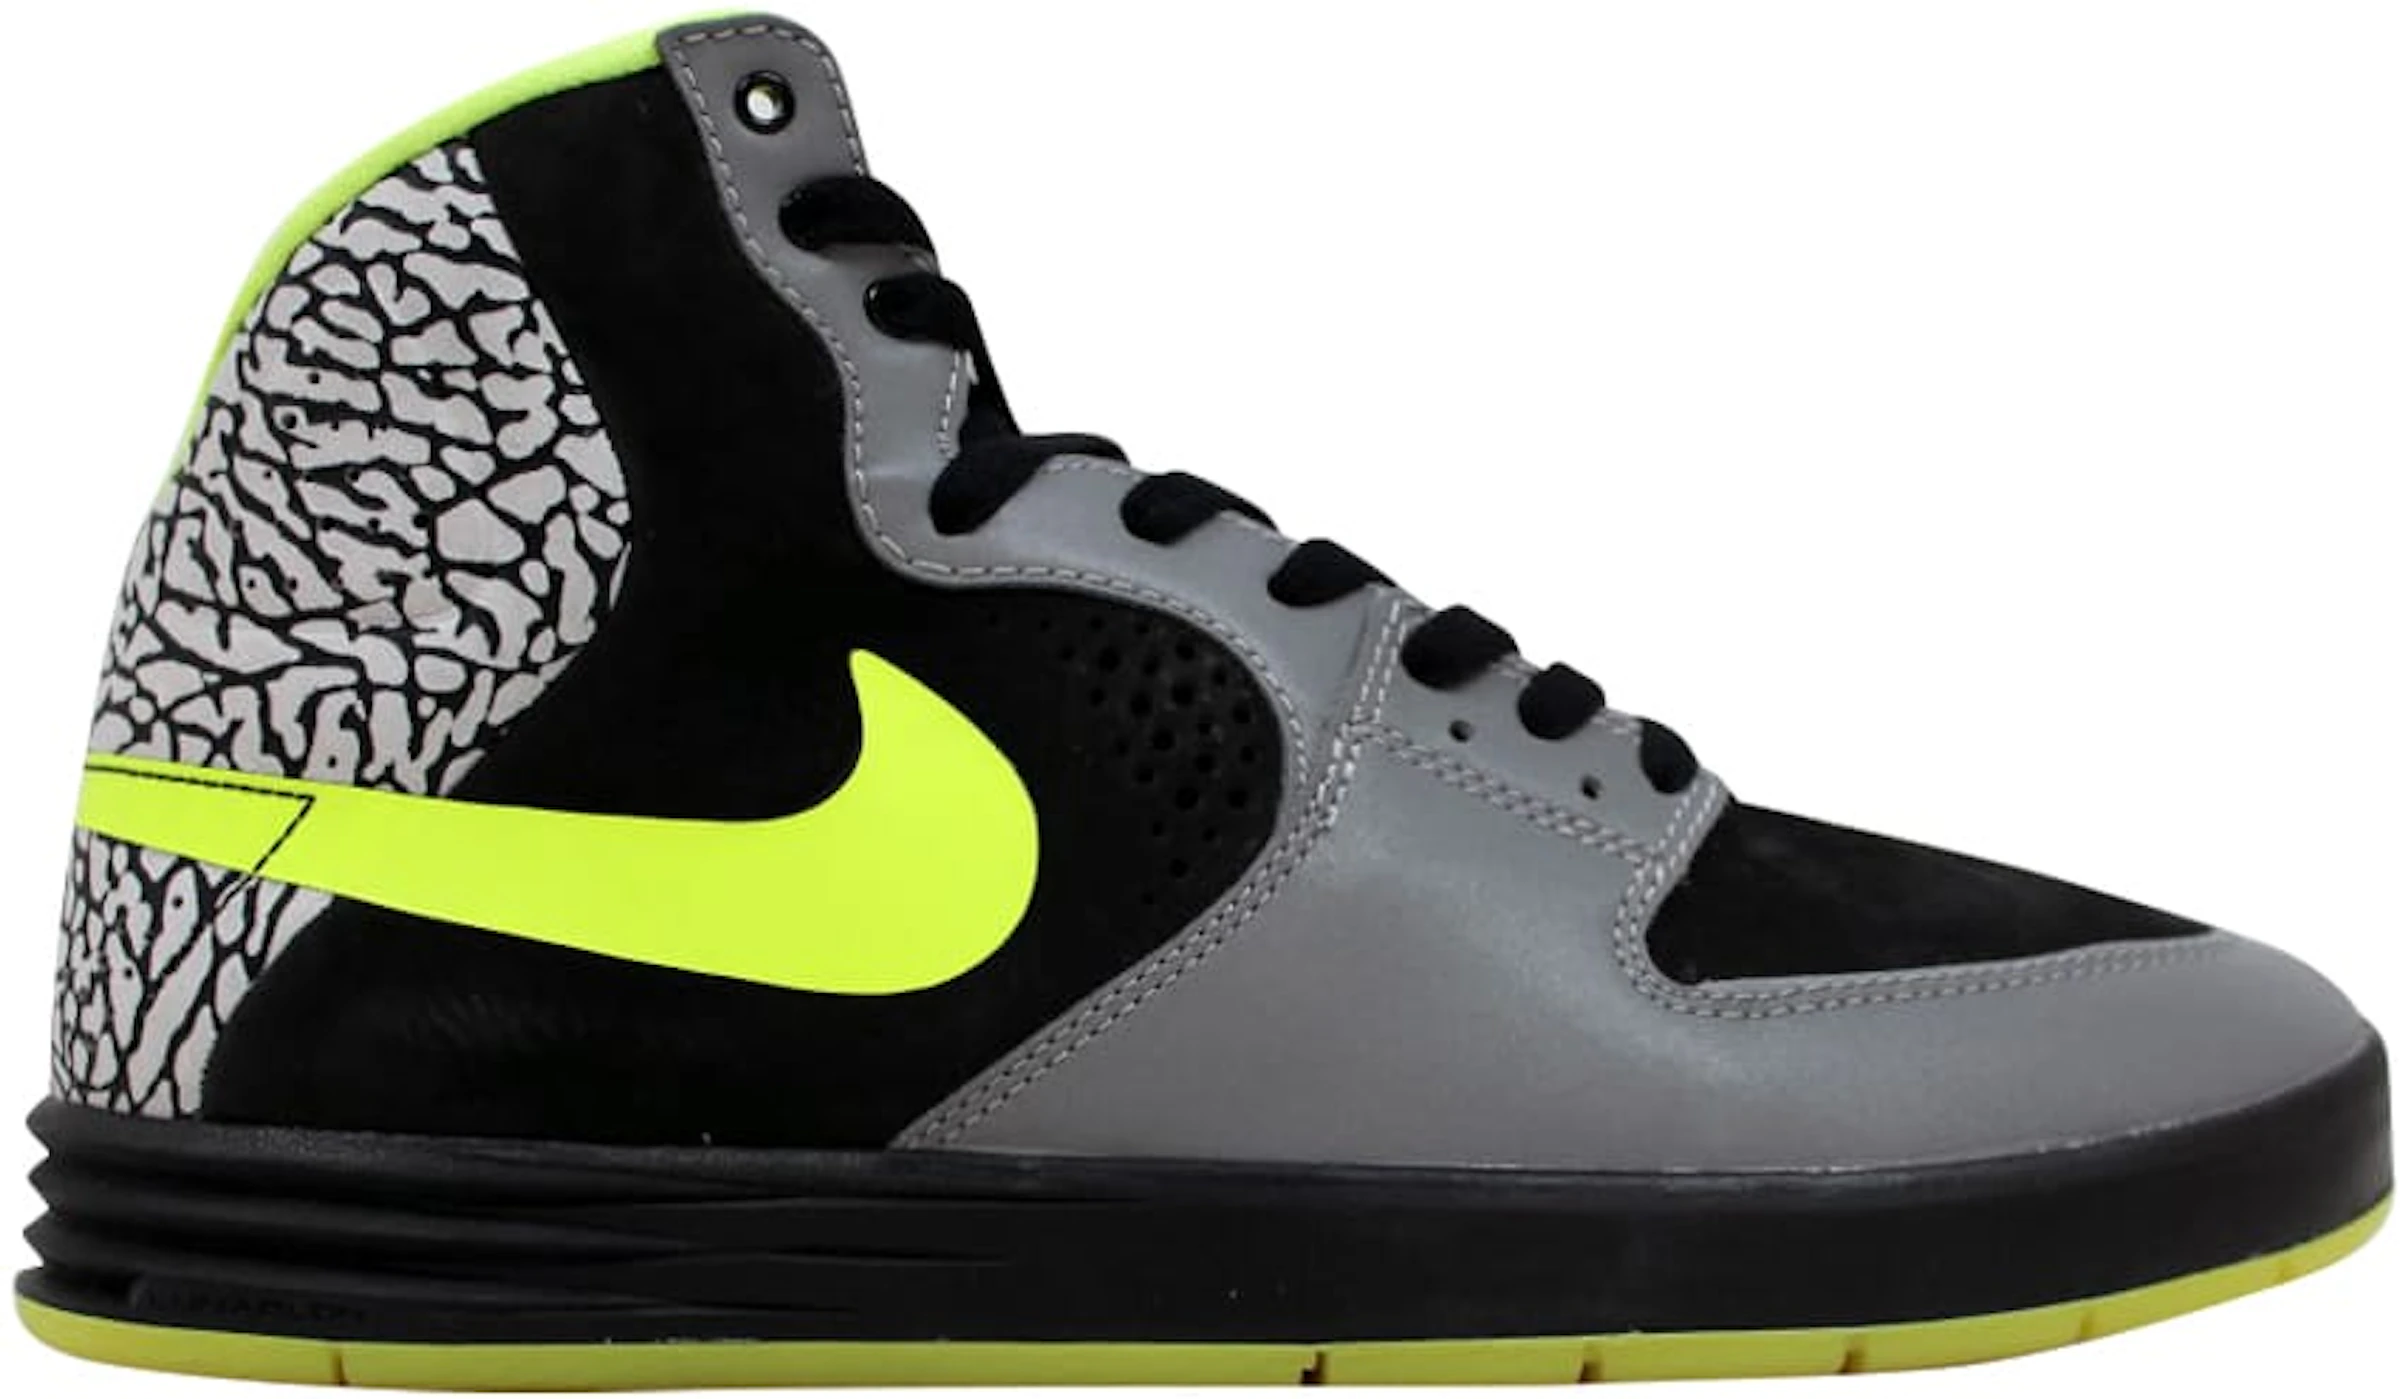 Nike Paul Rodriguez 7 Premium Clark Kent - 629183-030 - ES